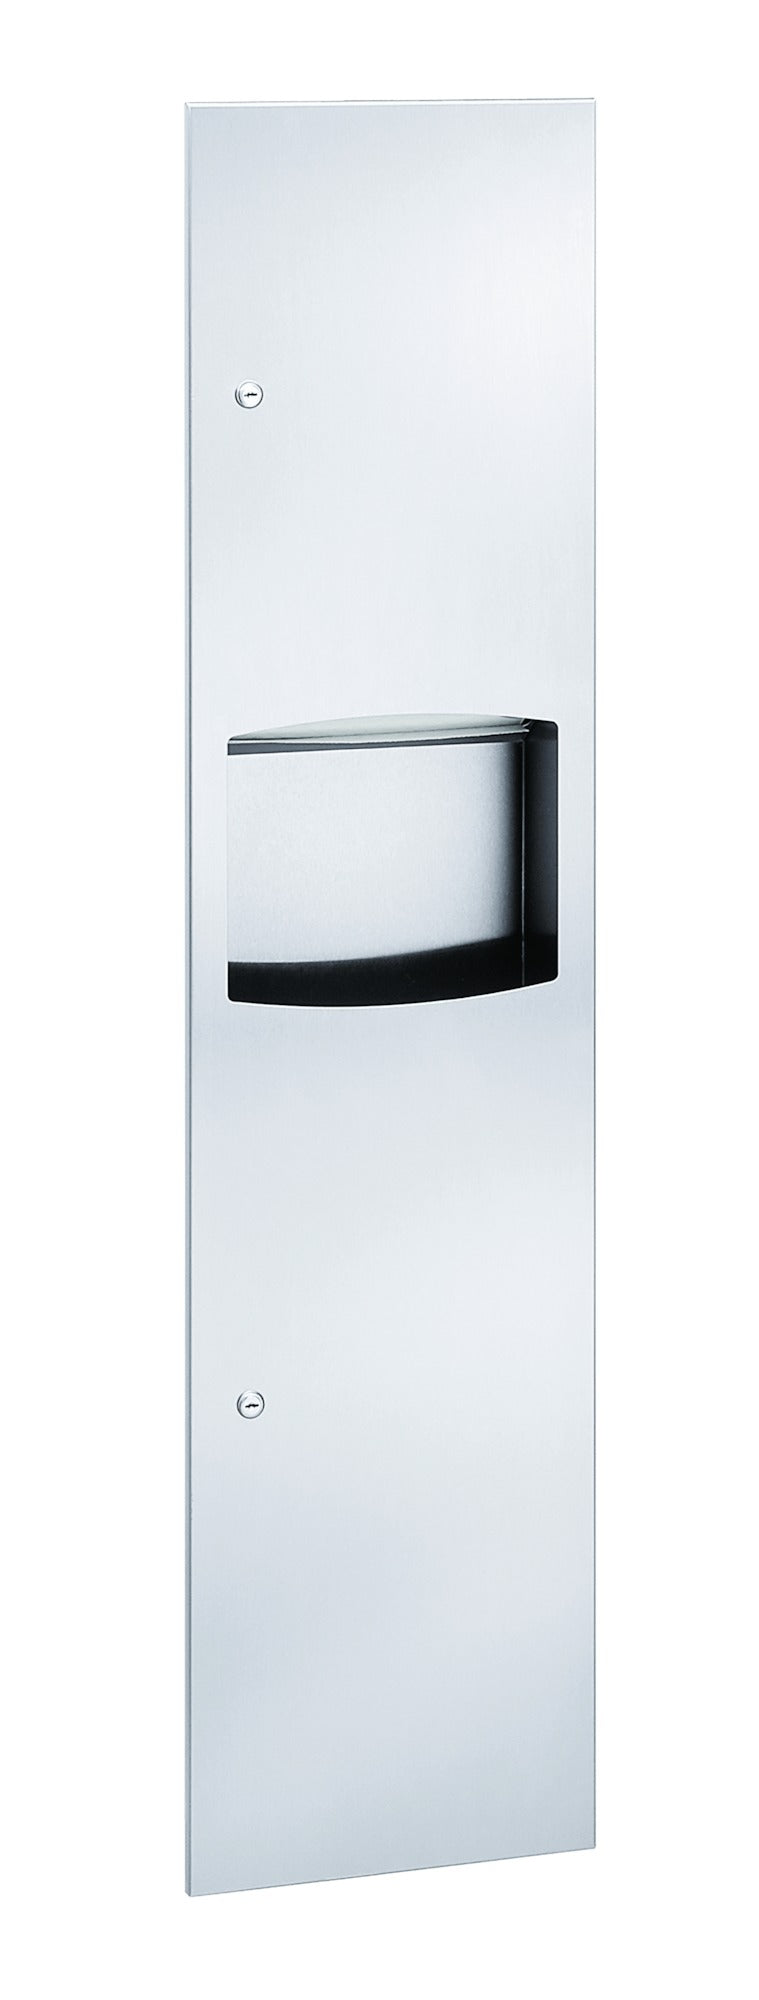 Bradley 2027-780000 - Recessed Paper Towel Dispenser/Waste Receptacle, 3.3 Gal - Polished Stainless Steel